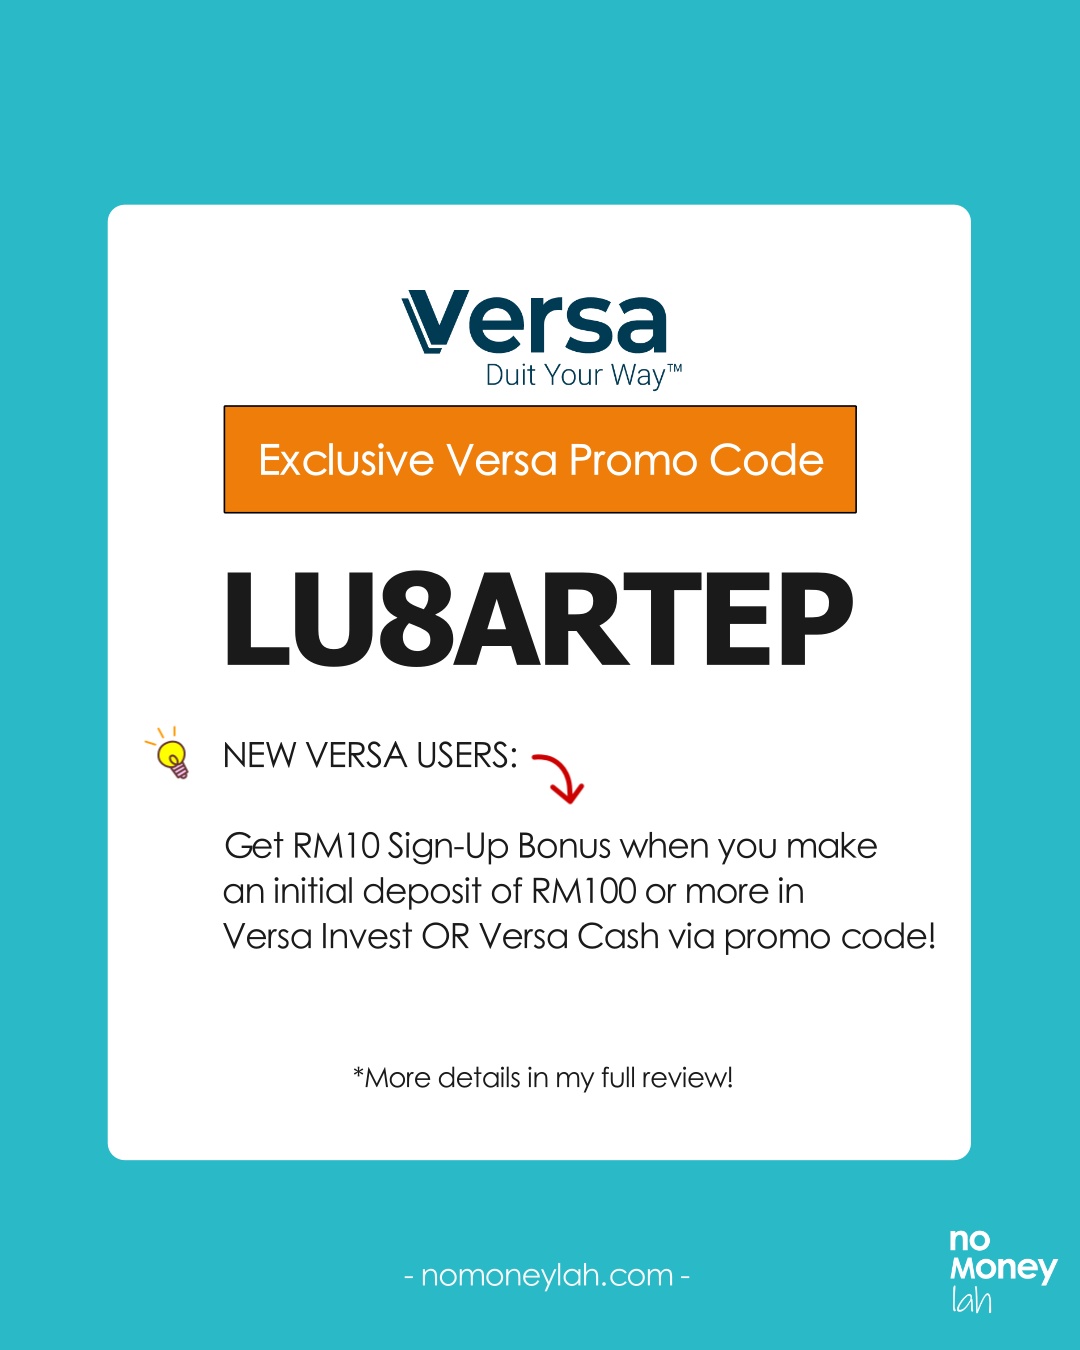 Versa Invest & Versa Cash Promo Code: LU8ARTEP